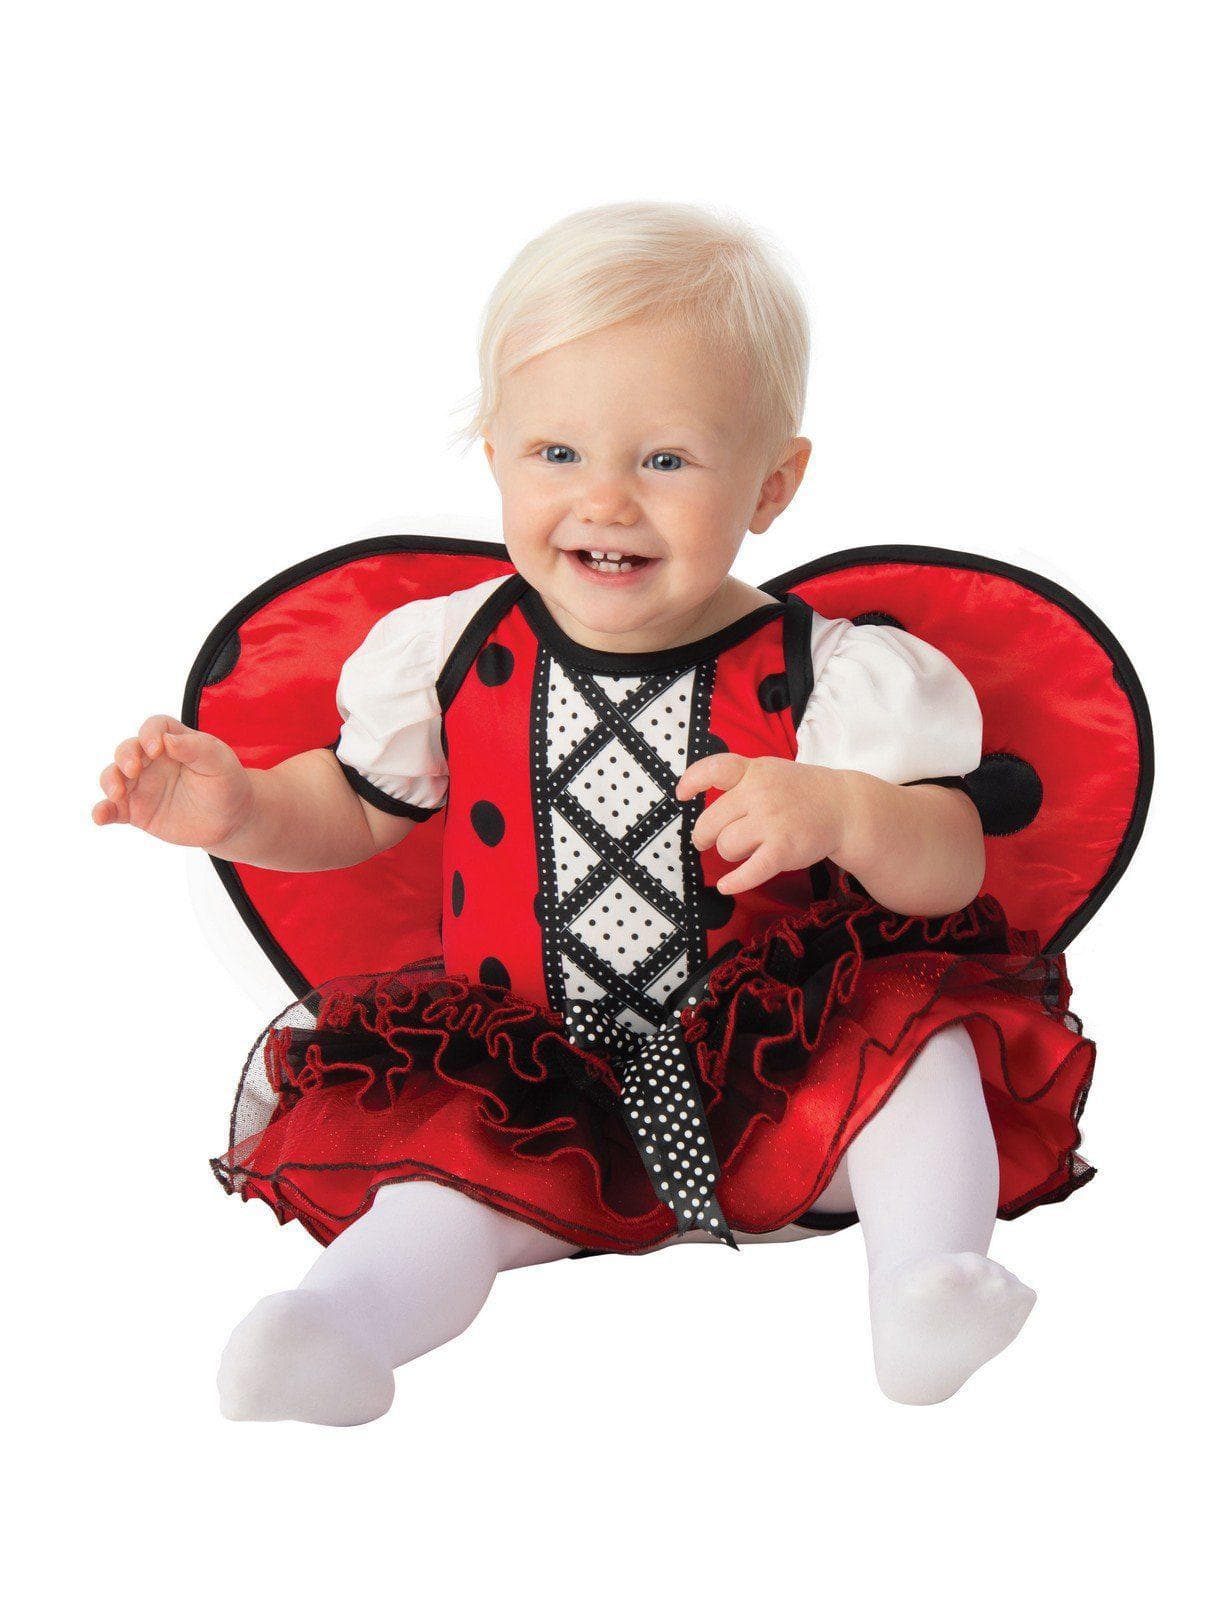 Baby/Toddler Ladybug Costume - costumes.com